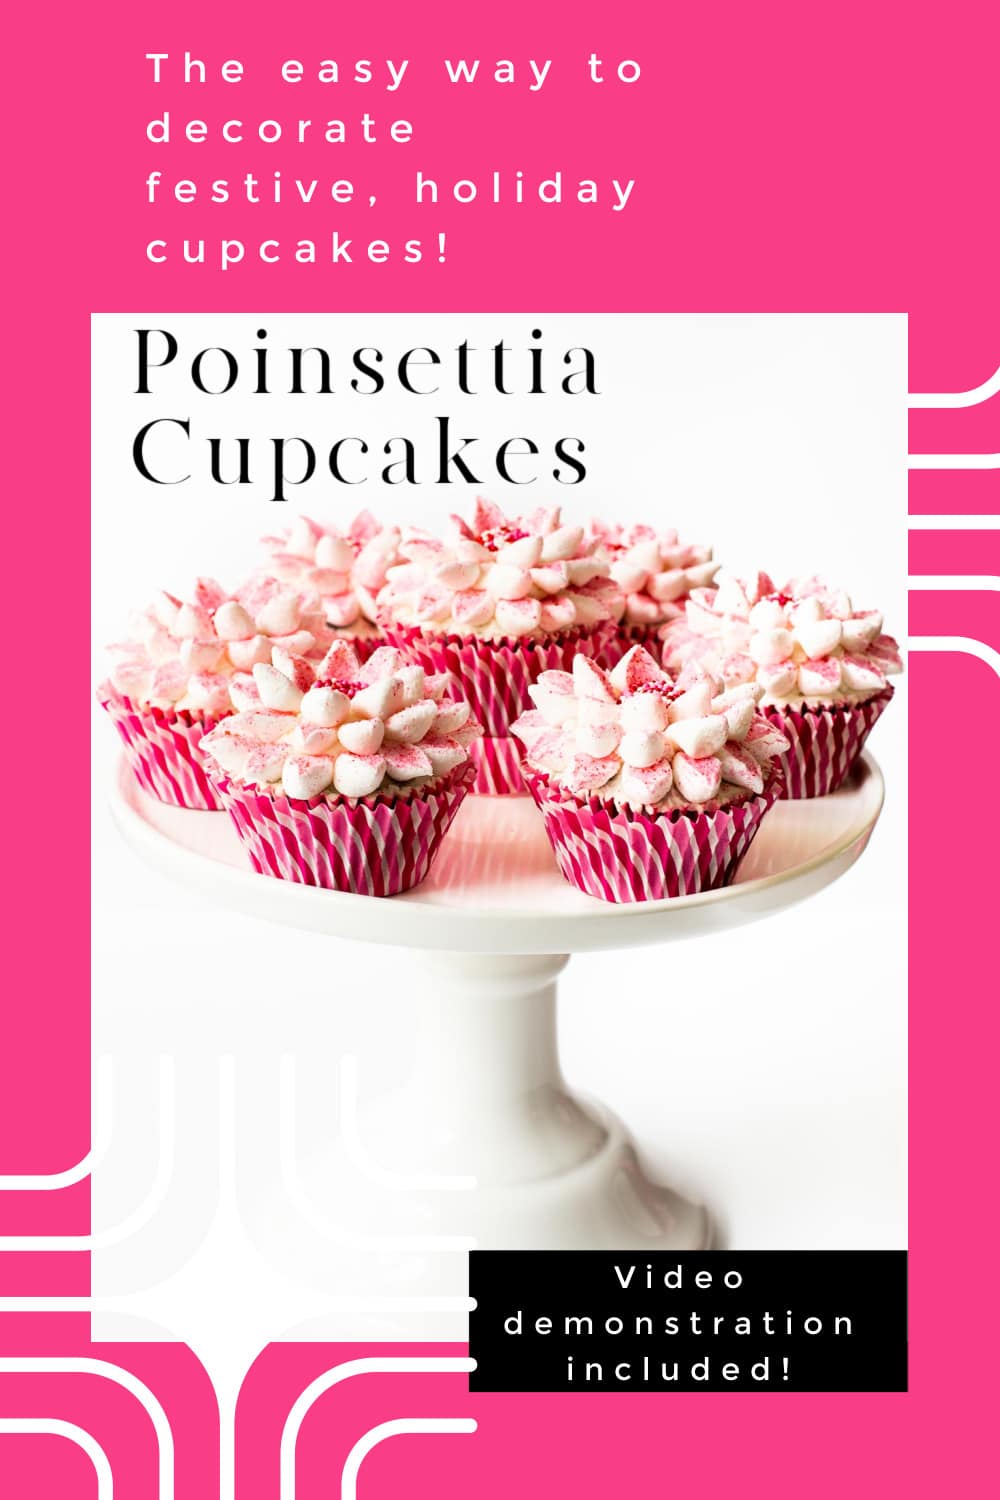 Poinsettia Cupcakes - The Fun, Festive, EASY Way to Decorate Cupcakes!